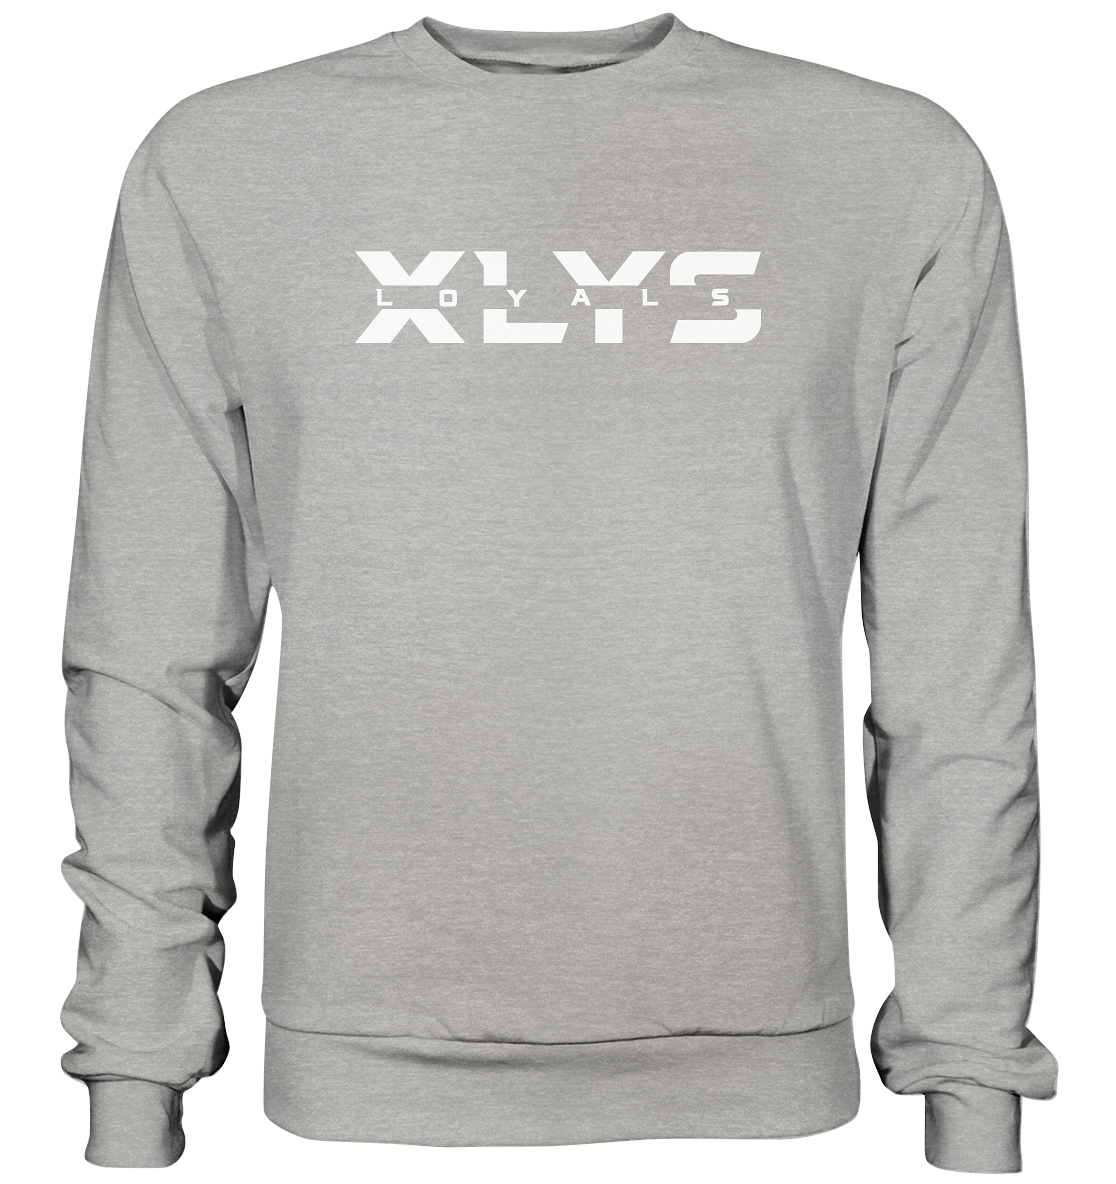 XLYS LOYALS - Basic Sweatshirt